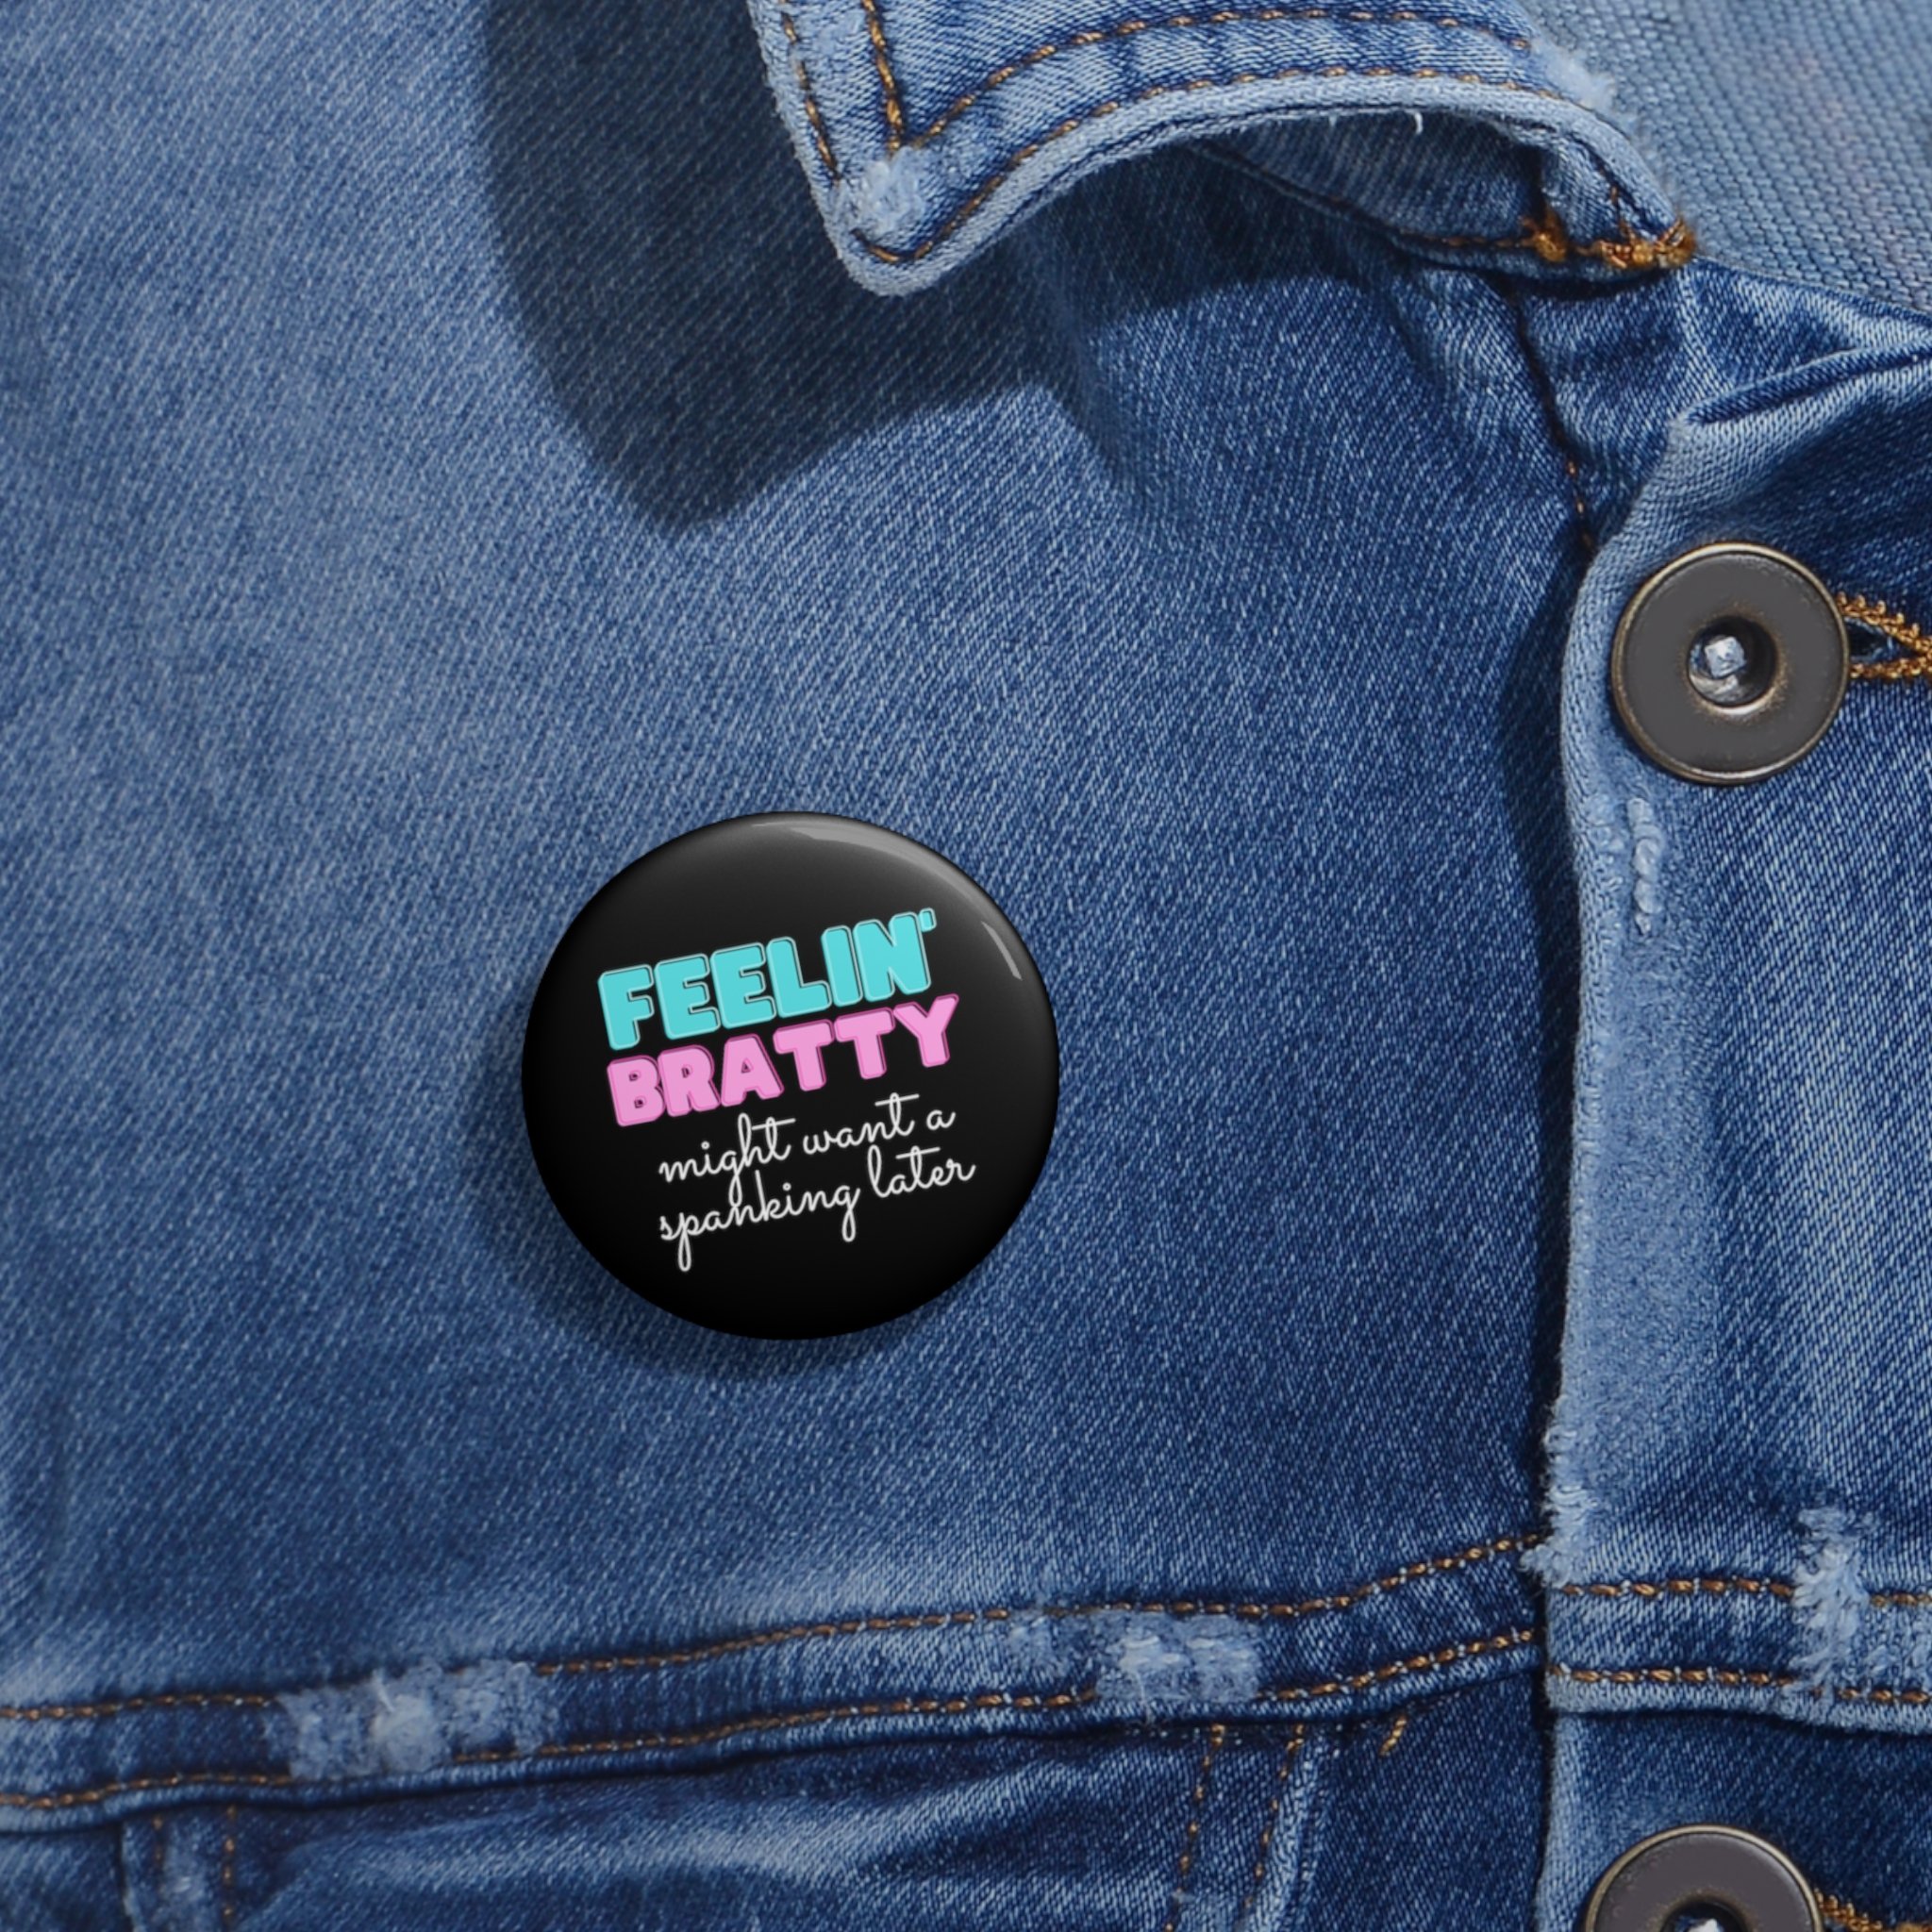 feelin-bratty-might-want-a-spanking-later-pin-button jacket 1.25.jpg